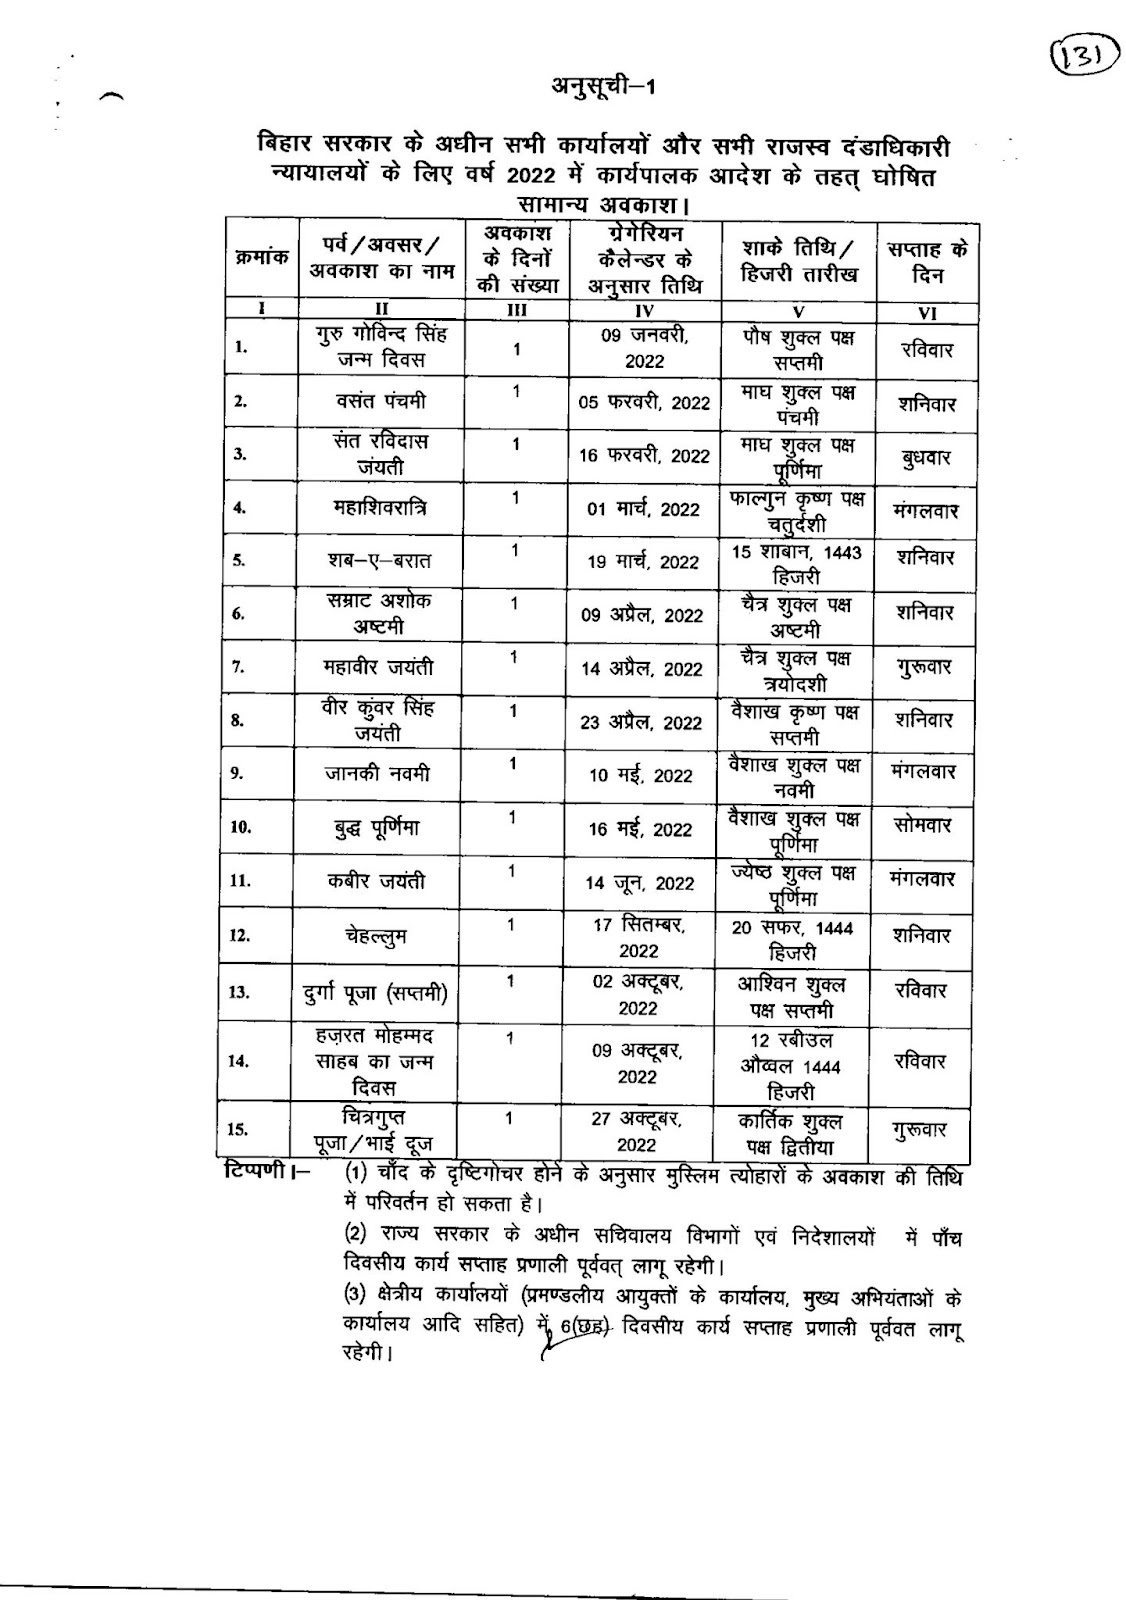 Bihar Government Calendar 2022